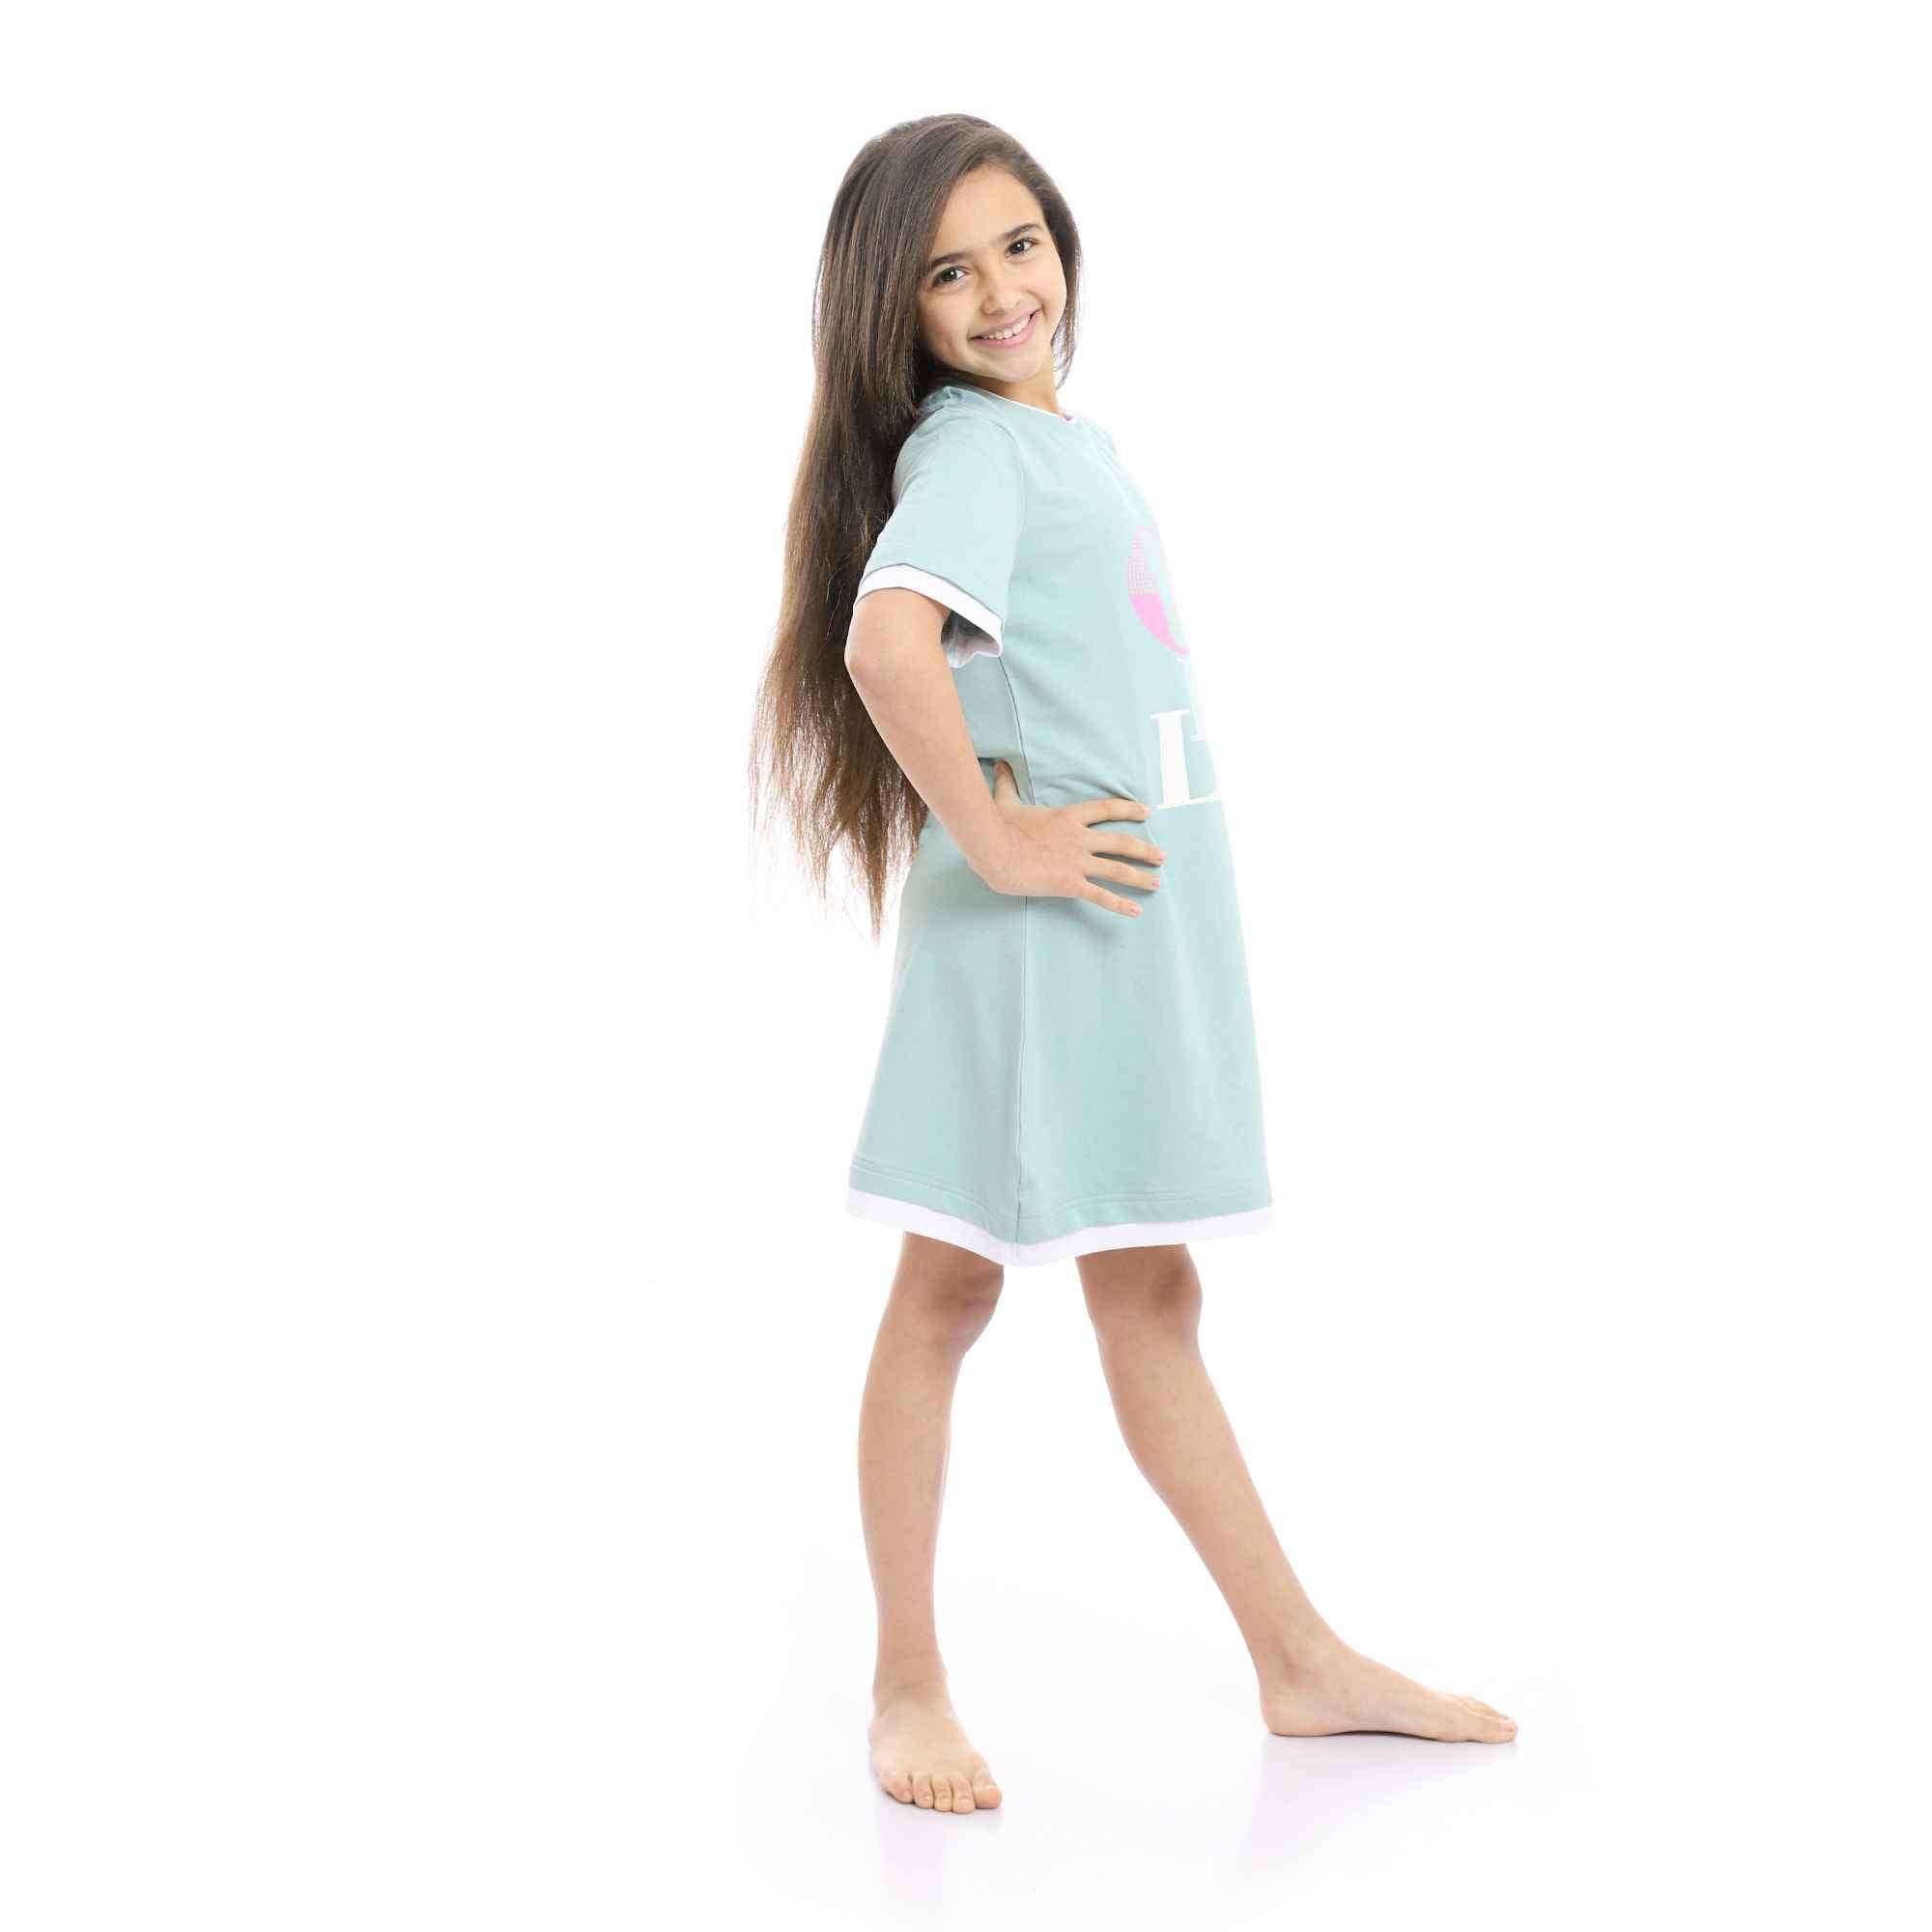 Girls Printed Short Sleeves Nightgown - Pastel Mint